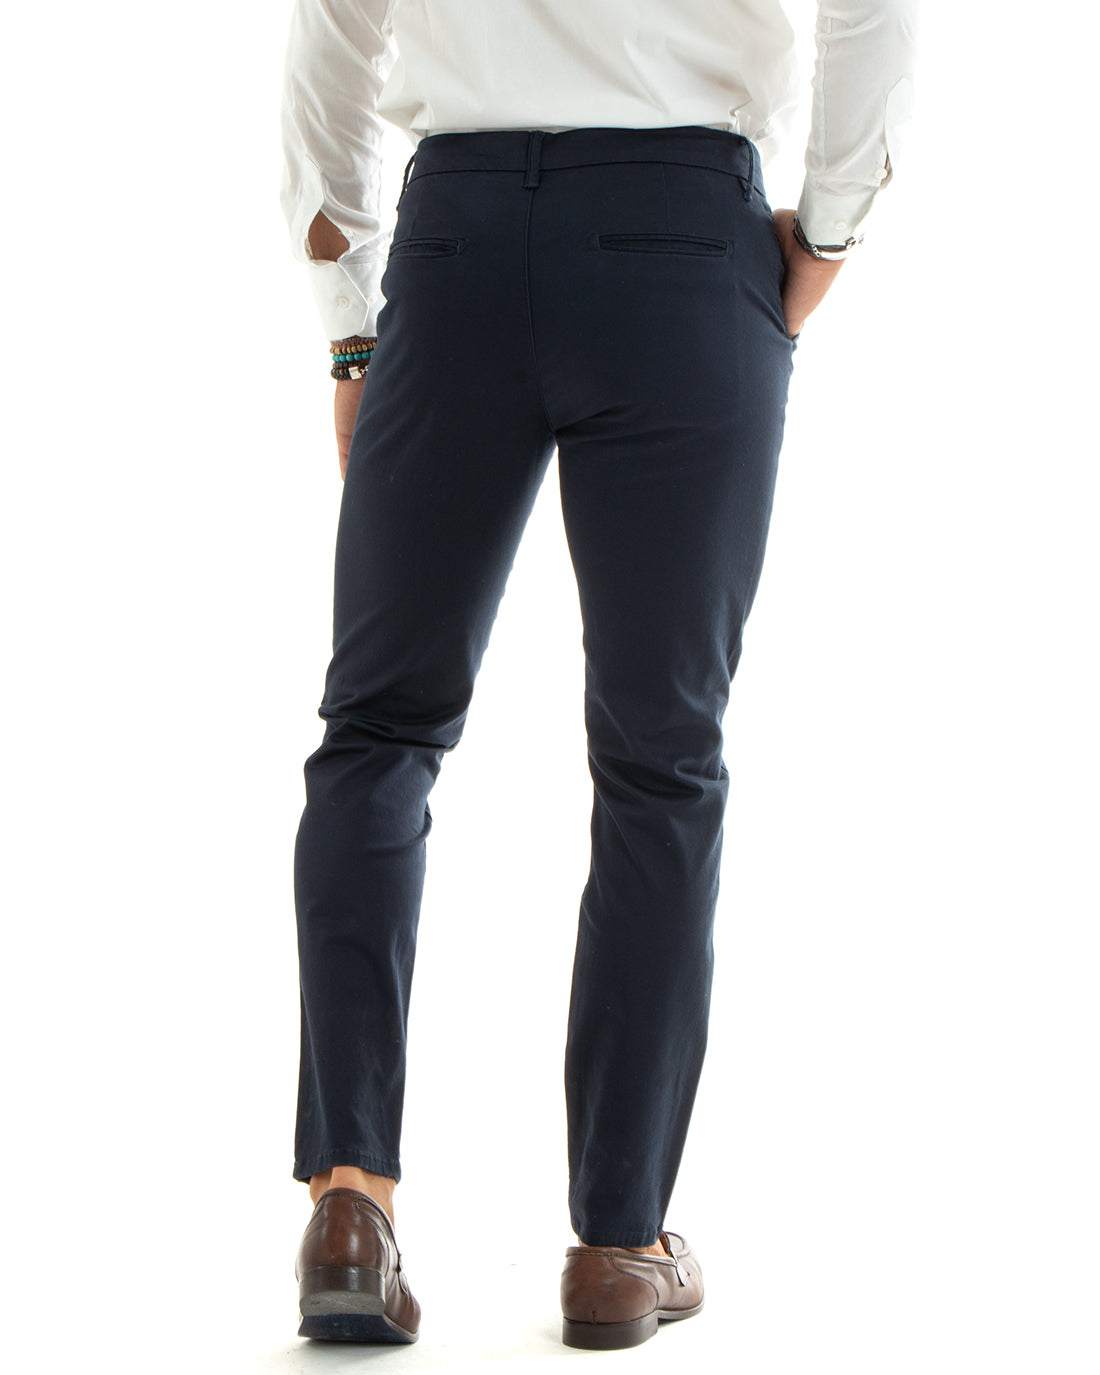 Pantaloni Uomo Cotone Raso Tasca America Slim Fit Tinta Unita Blu GIOSAL-P5971A